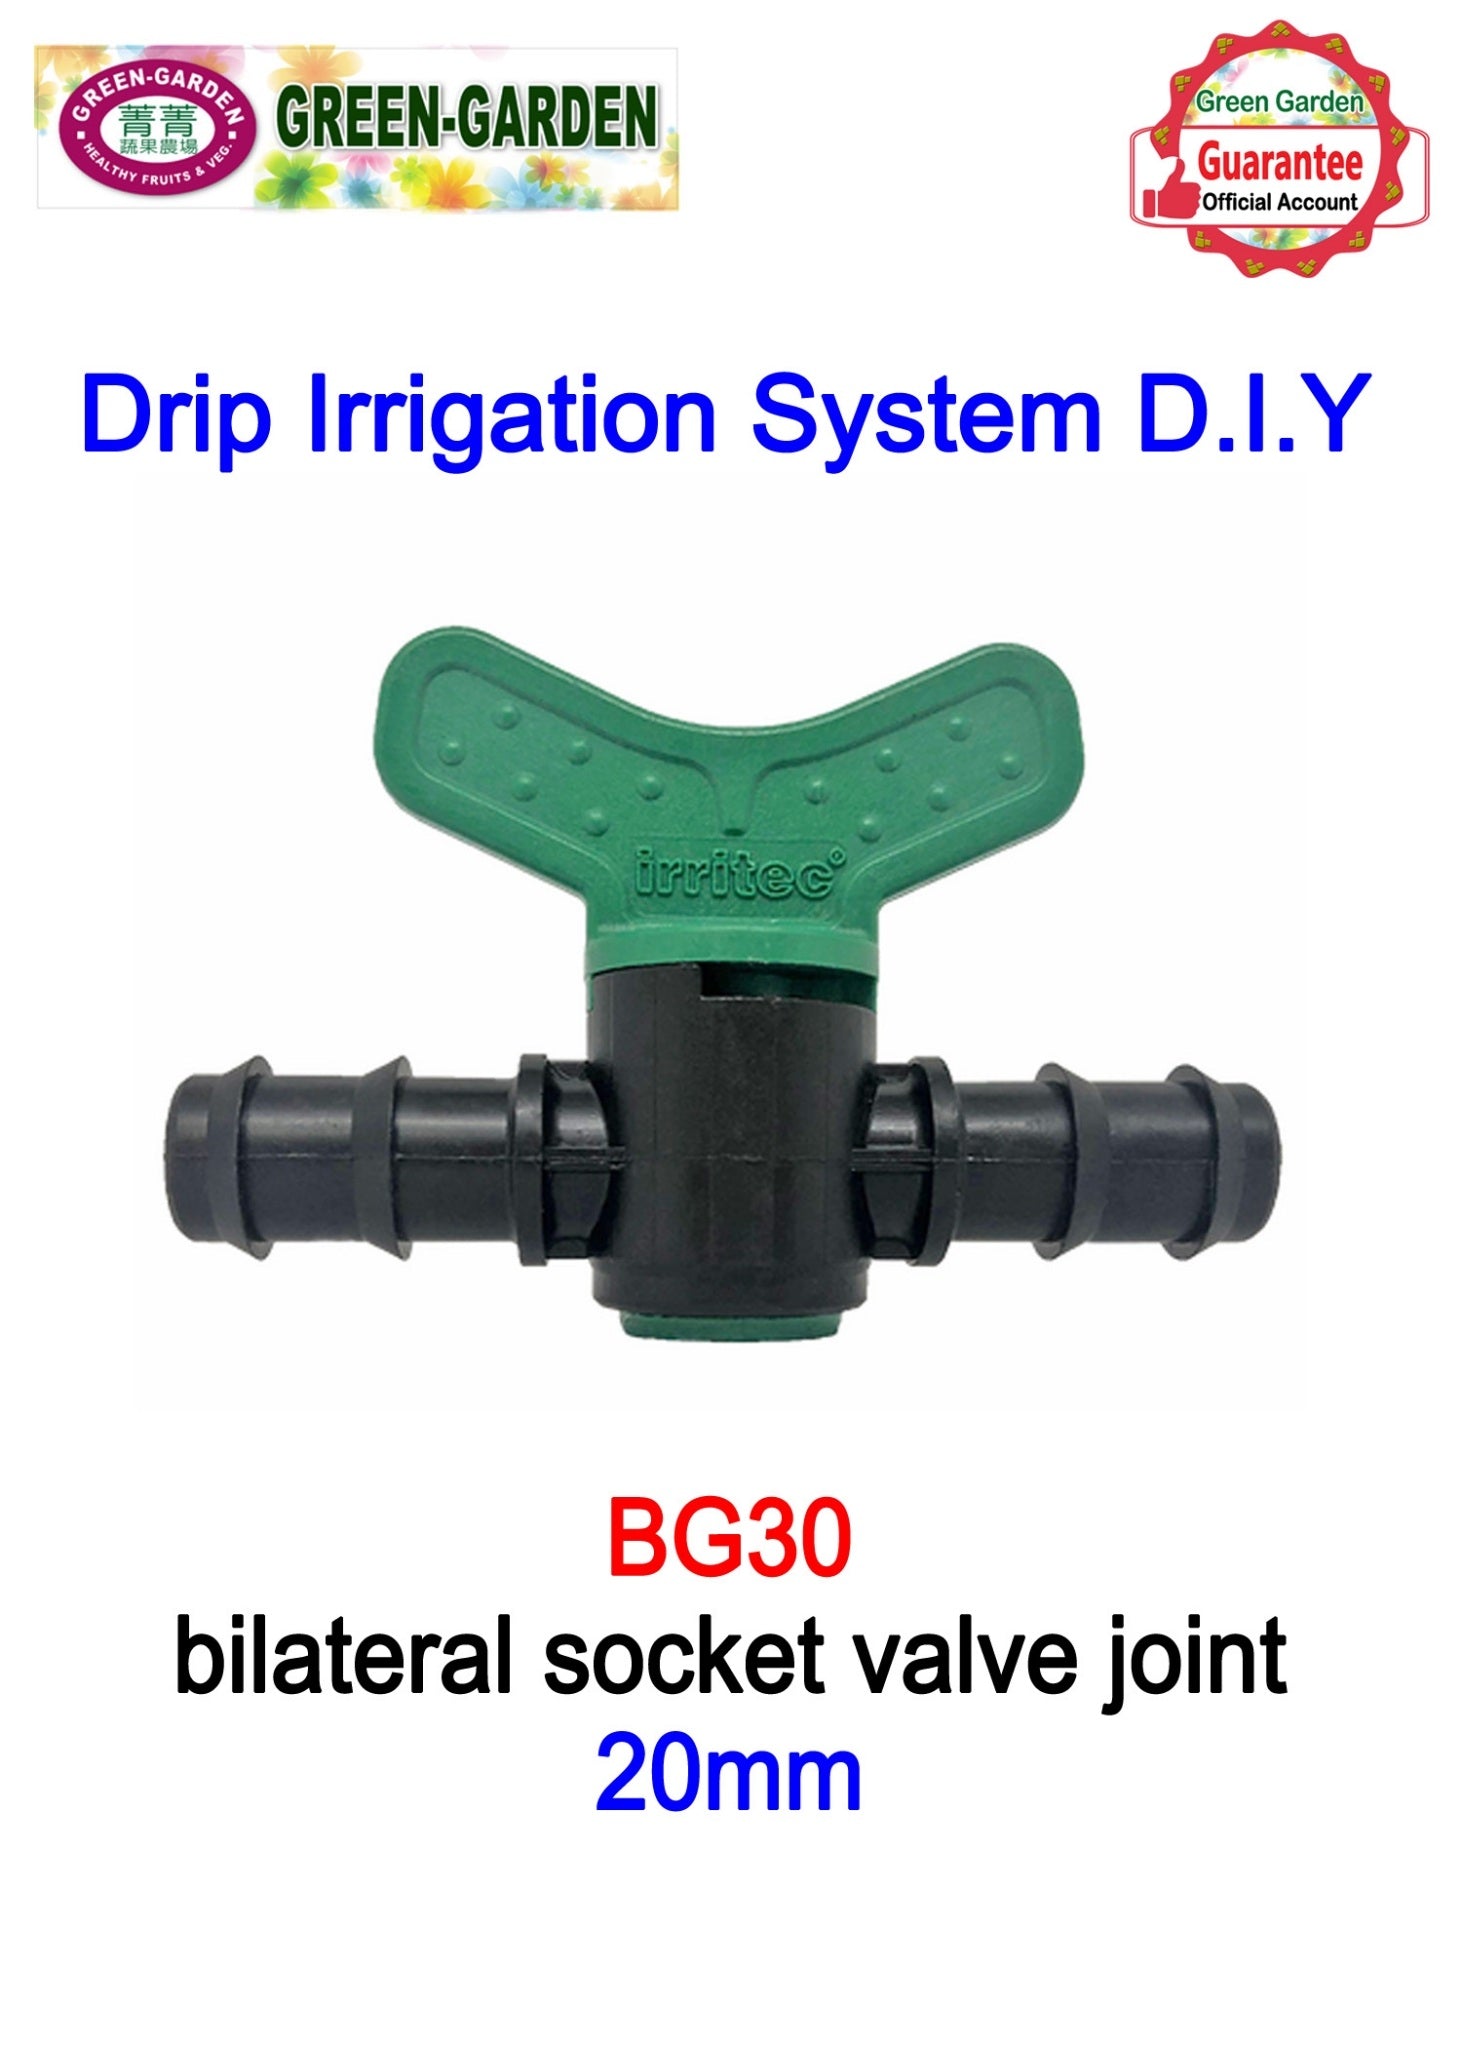 Drip Irrigation System - 20mm bilateral socket valve joint BG30